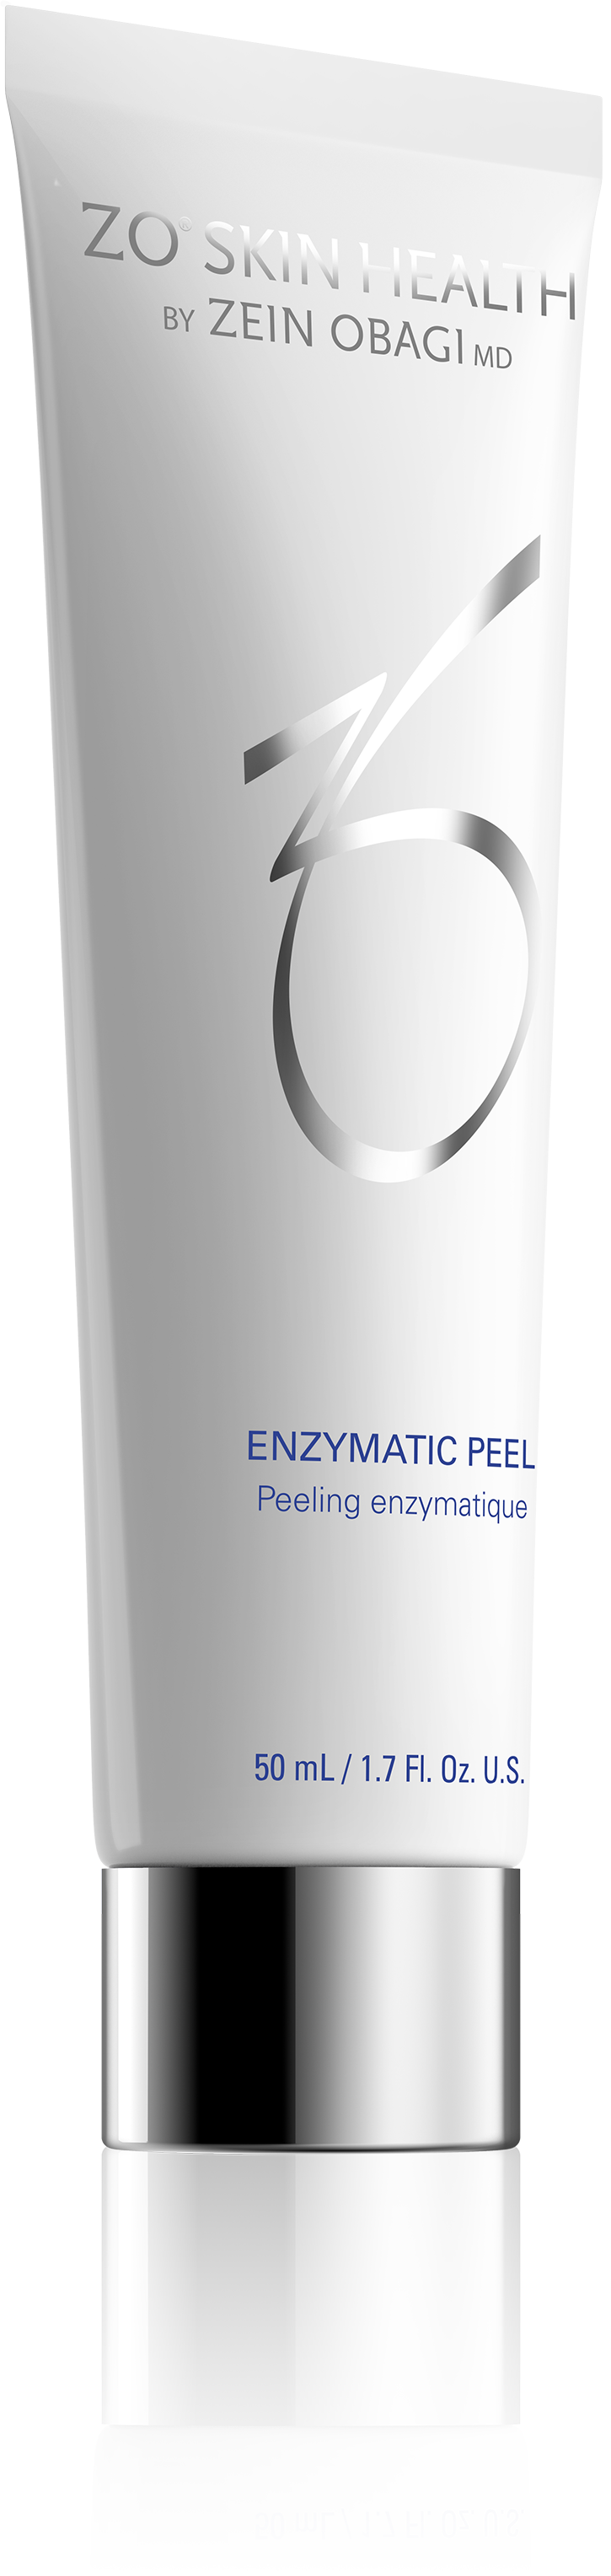 Enzymatic Peel